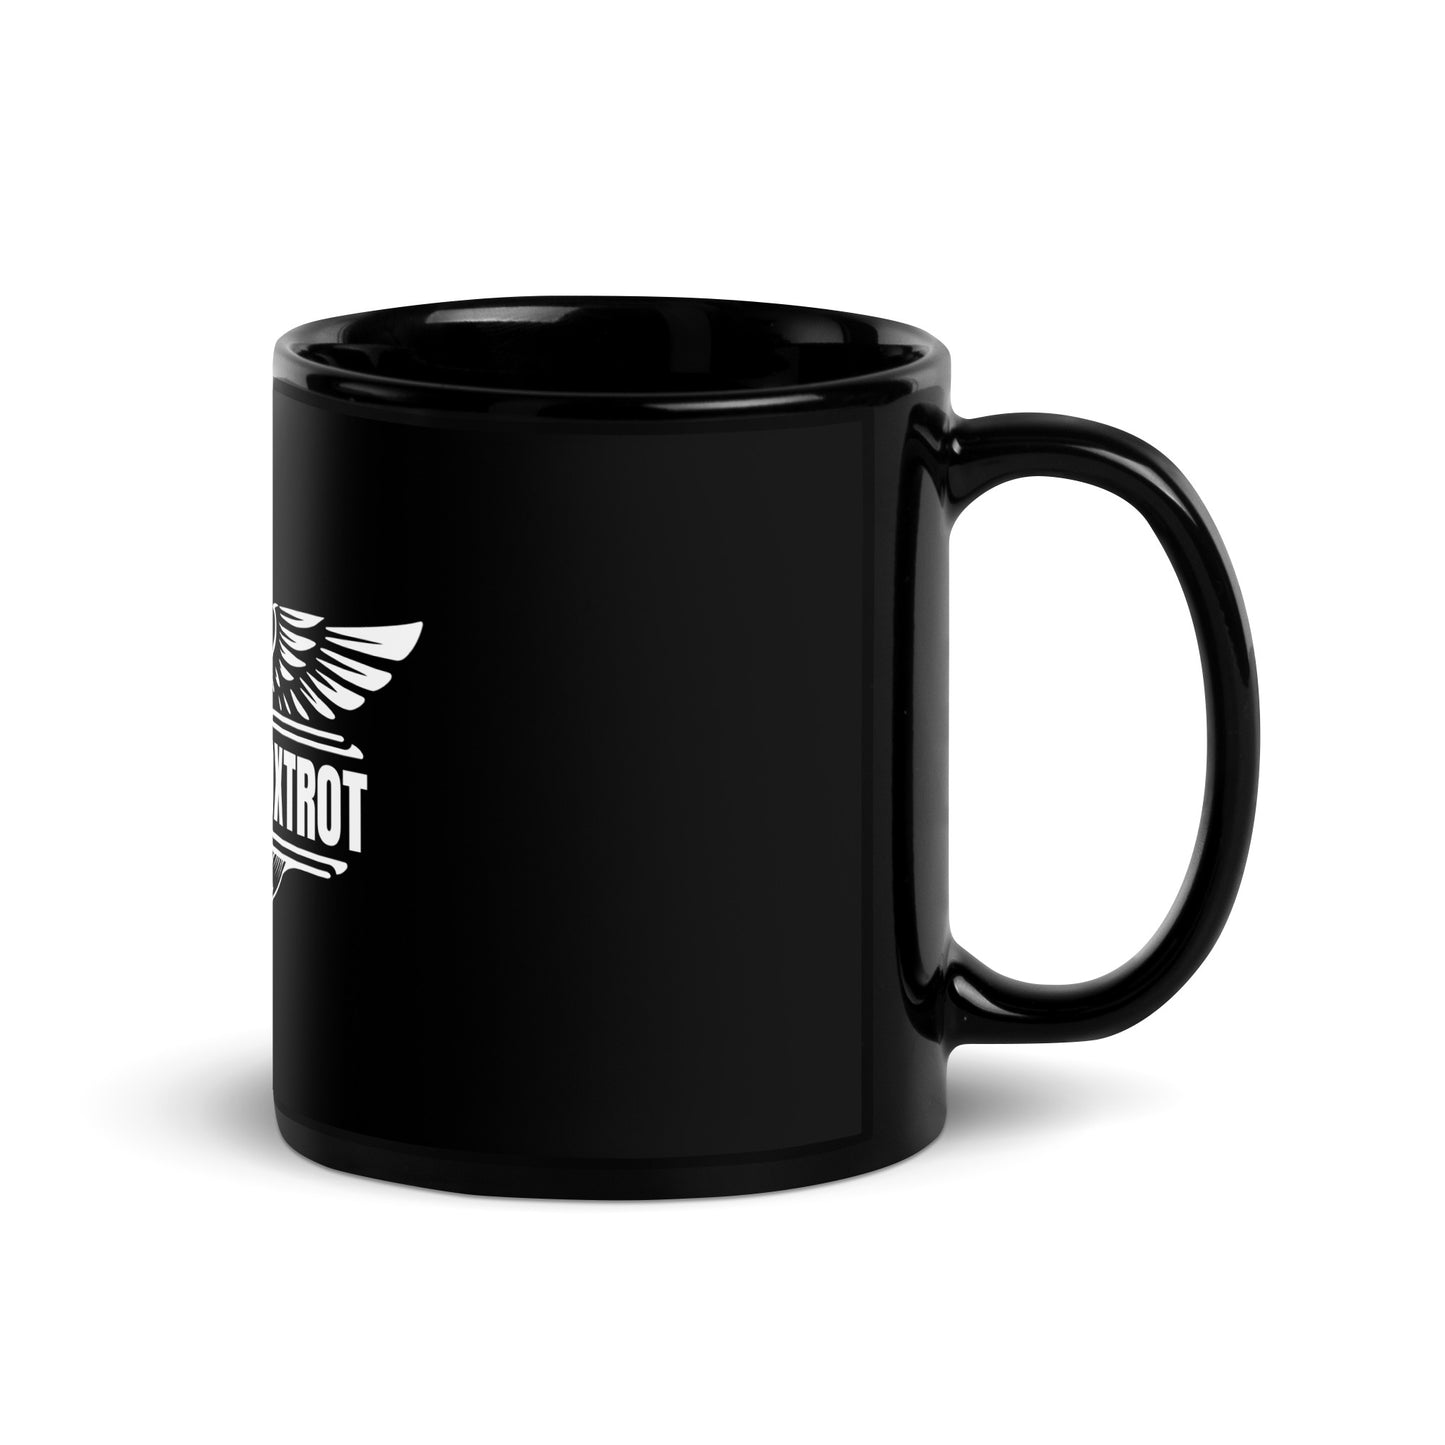 Charlie Foxtrot Black Coffee Mug